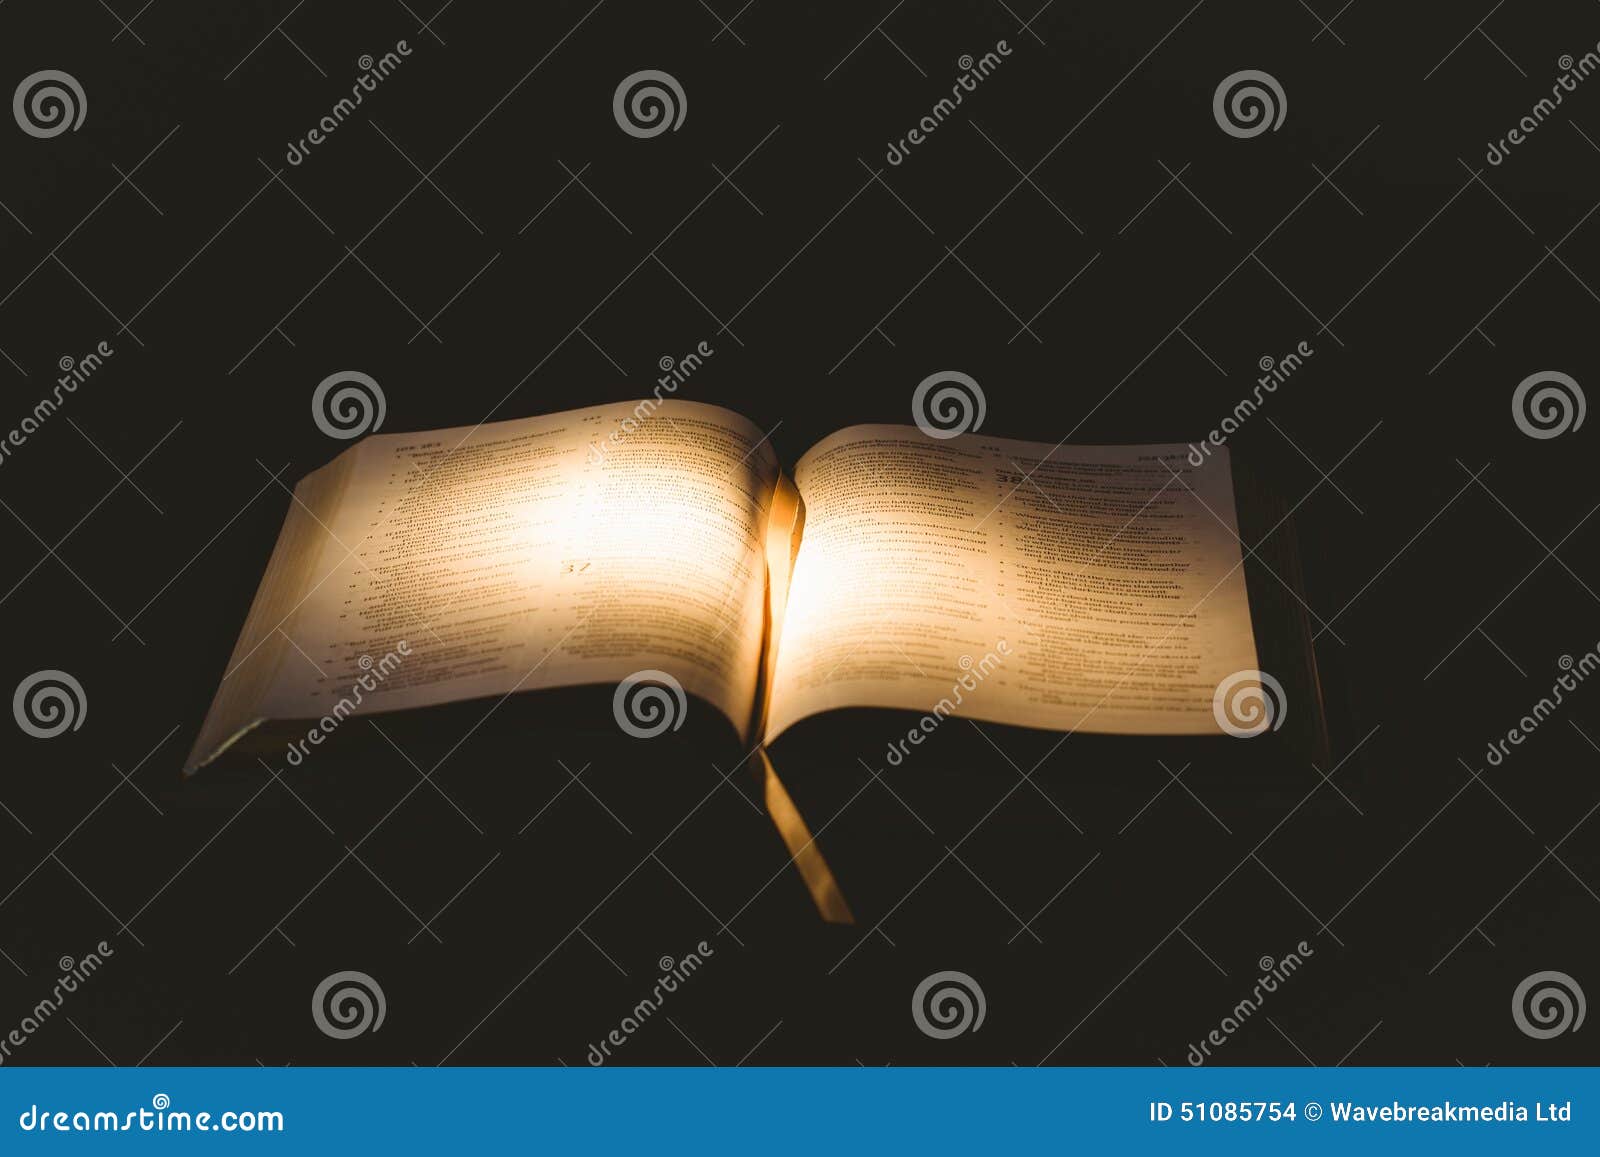 light shining on open bible